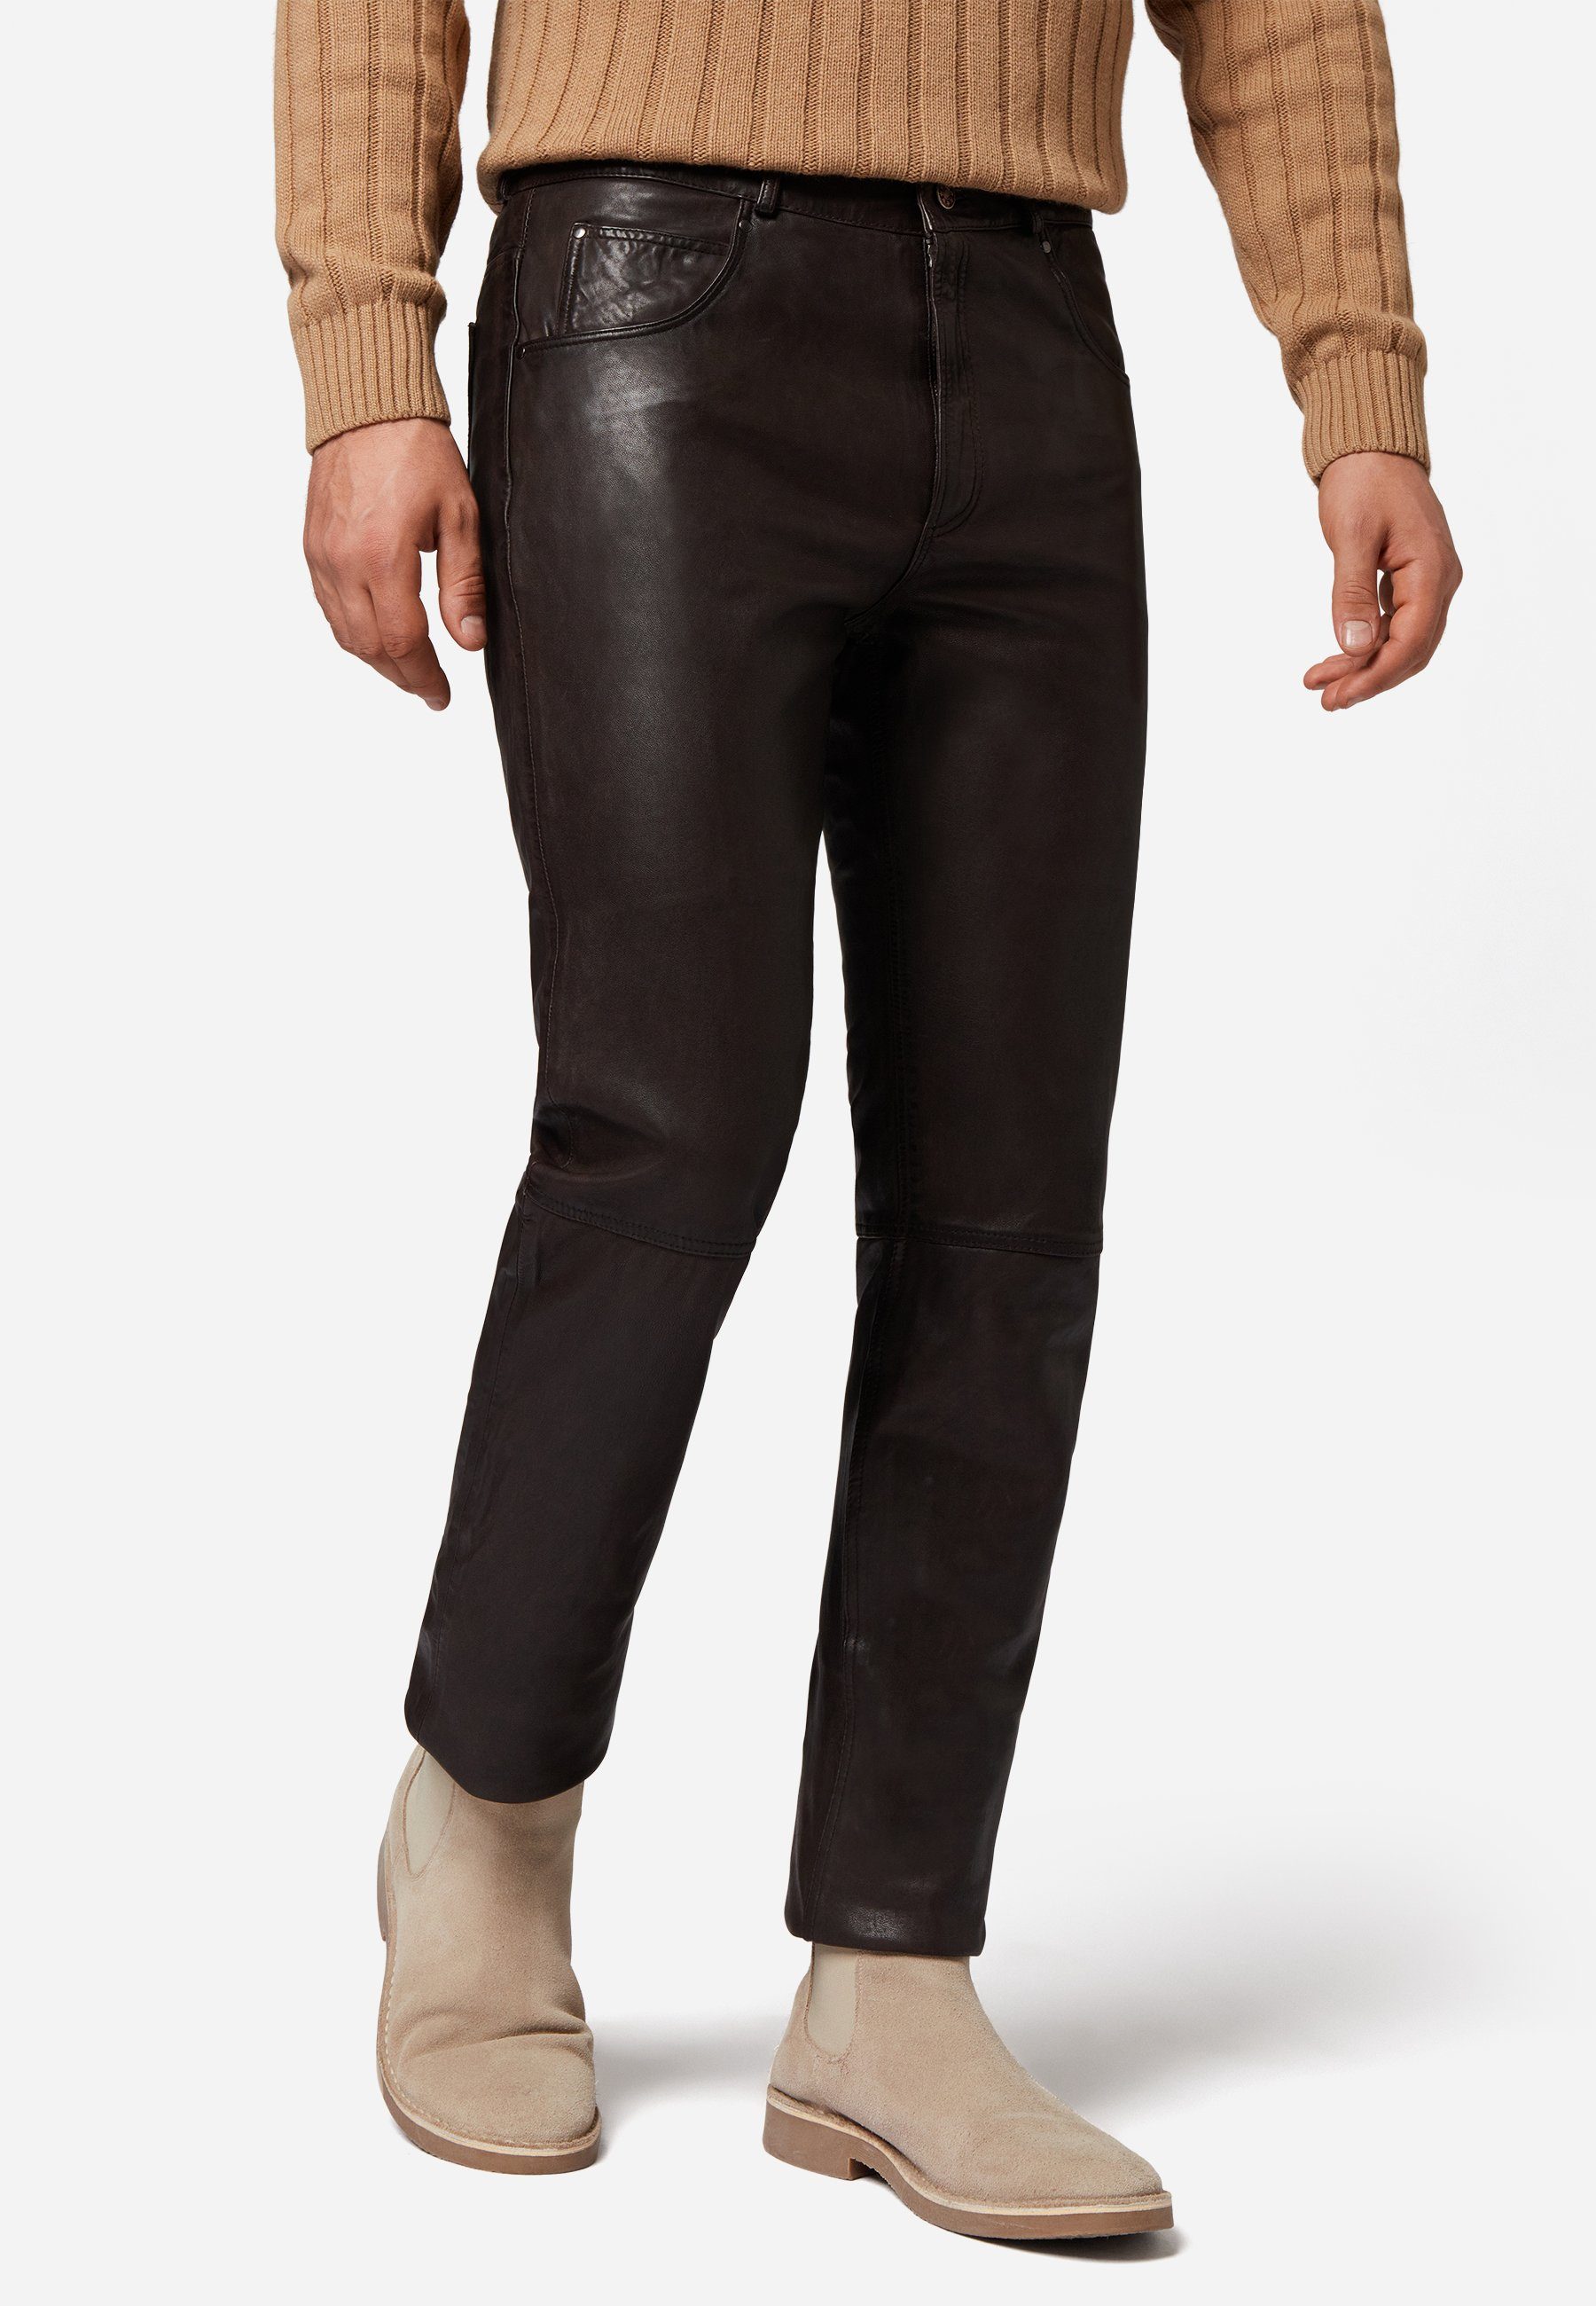 Lamm-Nappa Hochwertiges 5-Pocket Leder; Trant Pant Jeans-Optik Lederhose Braun RICANO